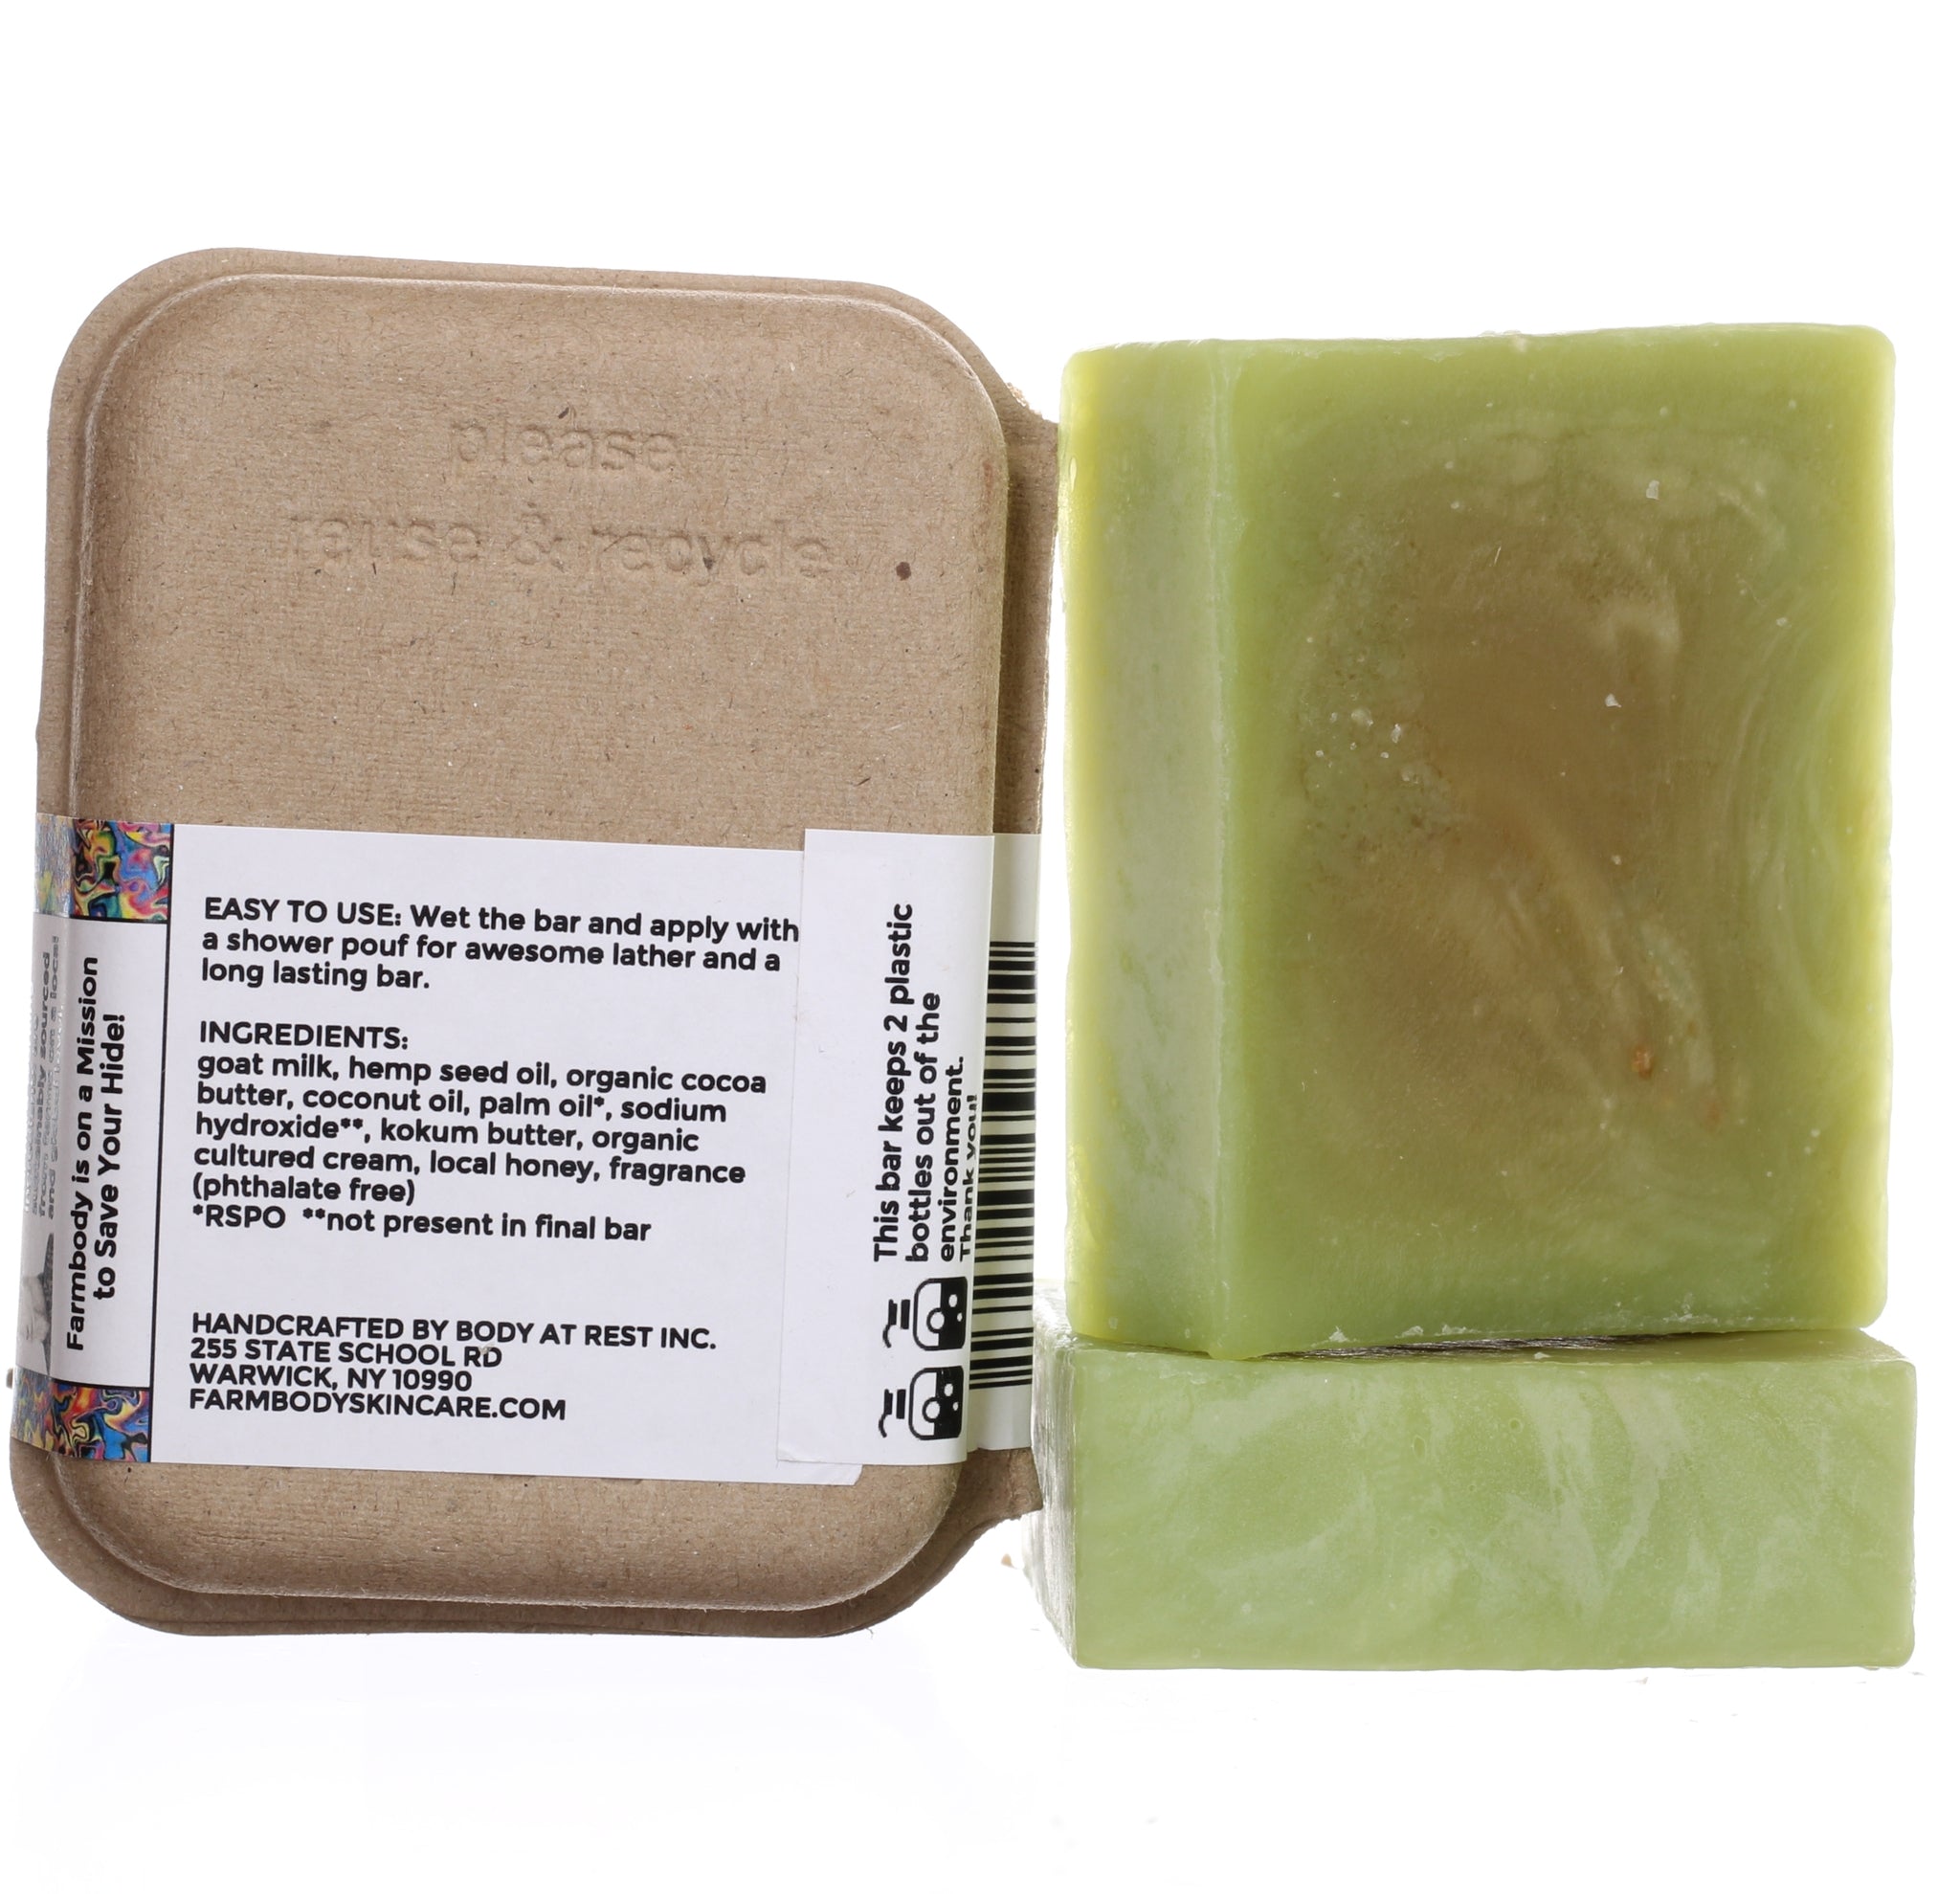 Moisturizing Goat Milk Bar Soap for Dry Sensitive Skin | AMERICA - Farmbody